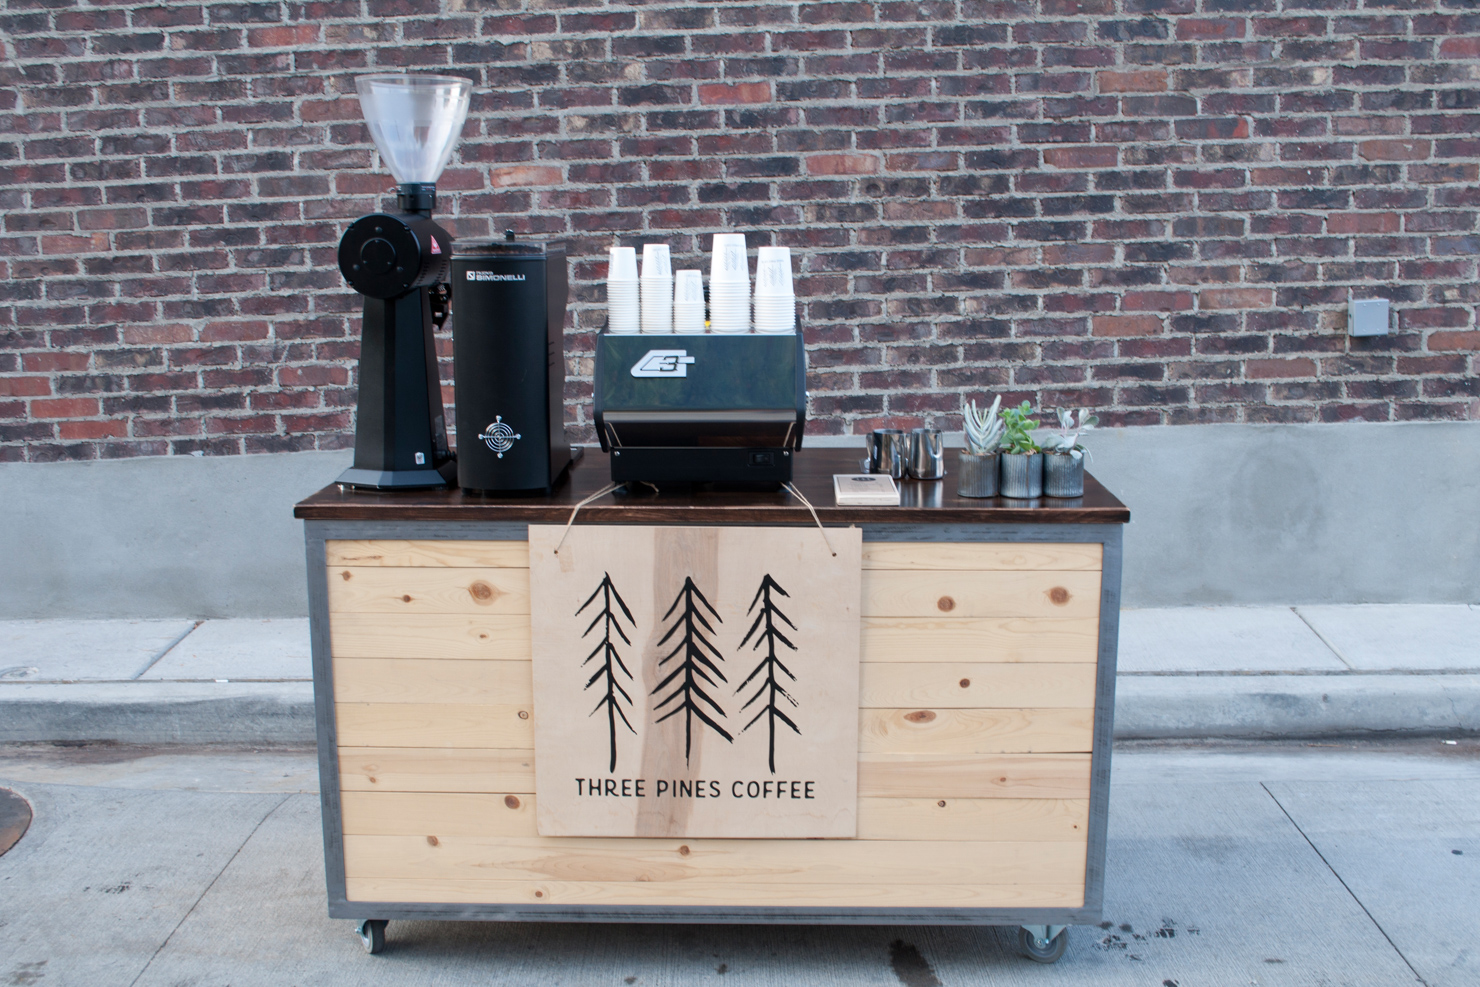 three pines coffee salt lake city utah liberty heights fresh coffee cart sprudge